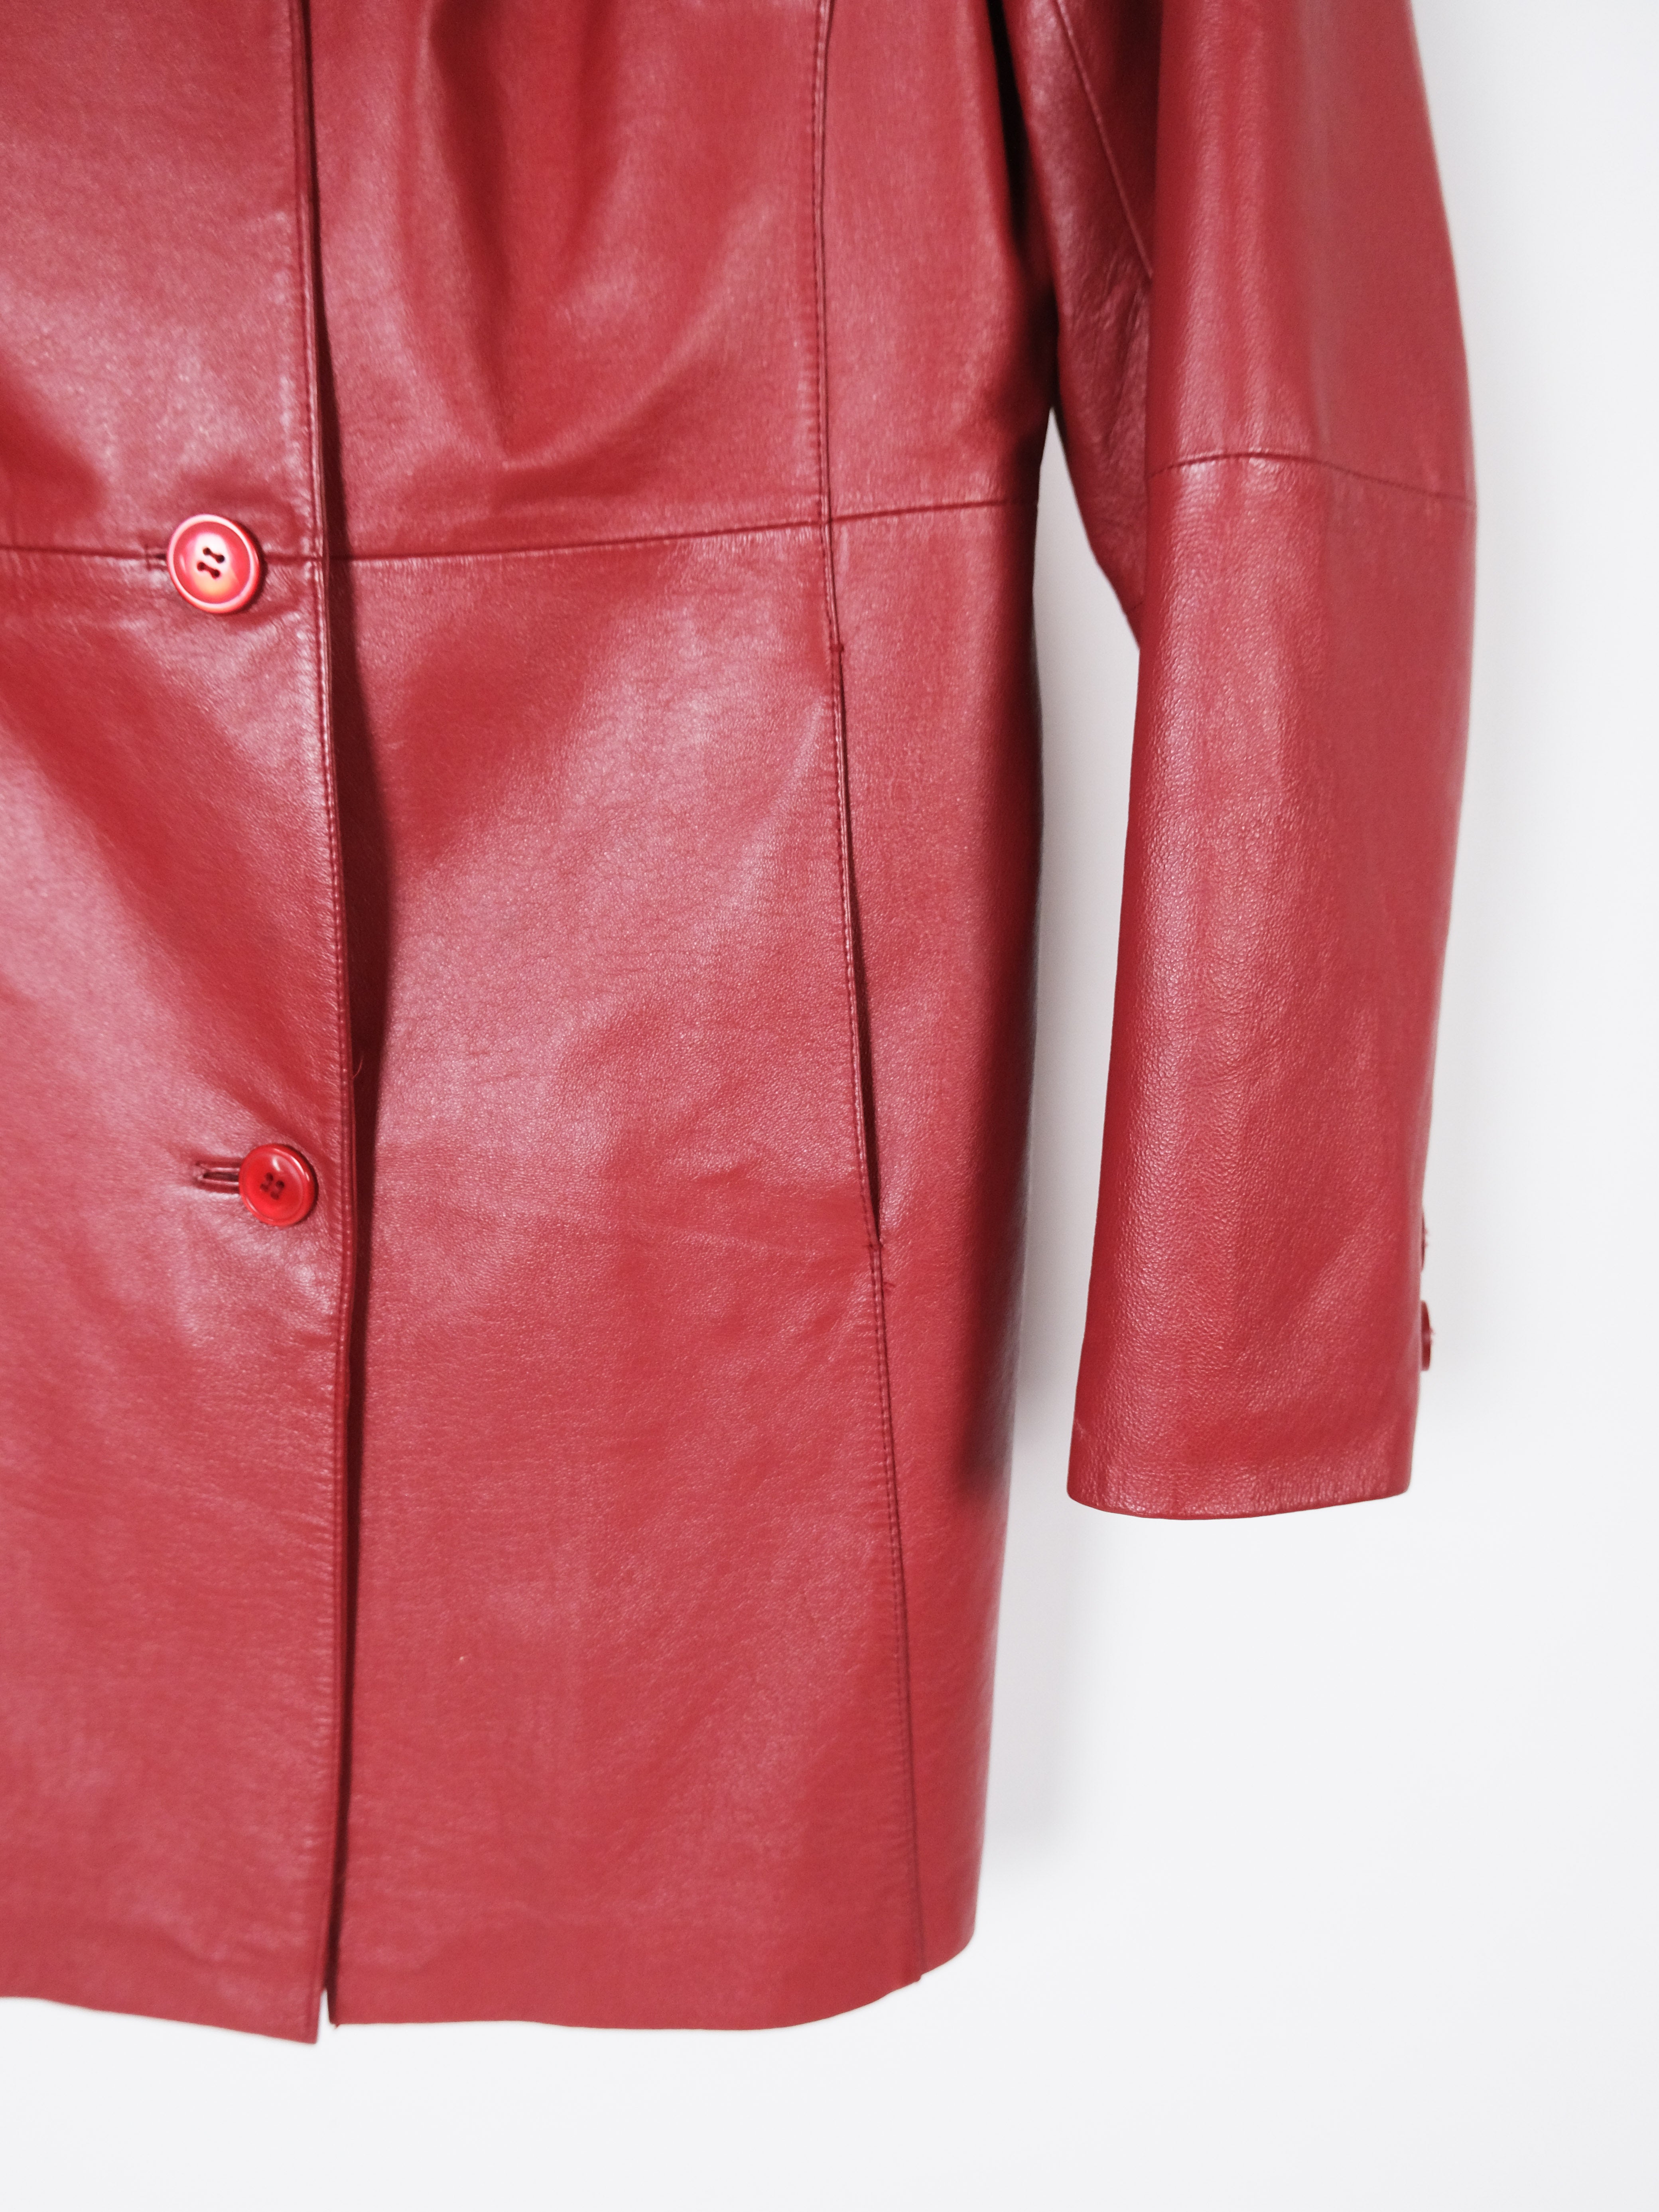 Leather coat red blazer